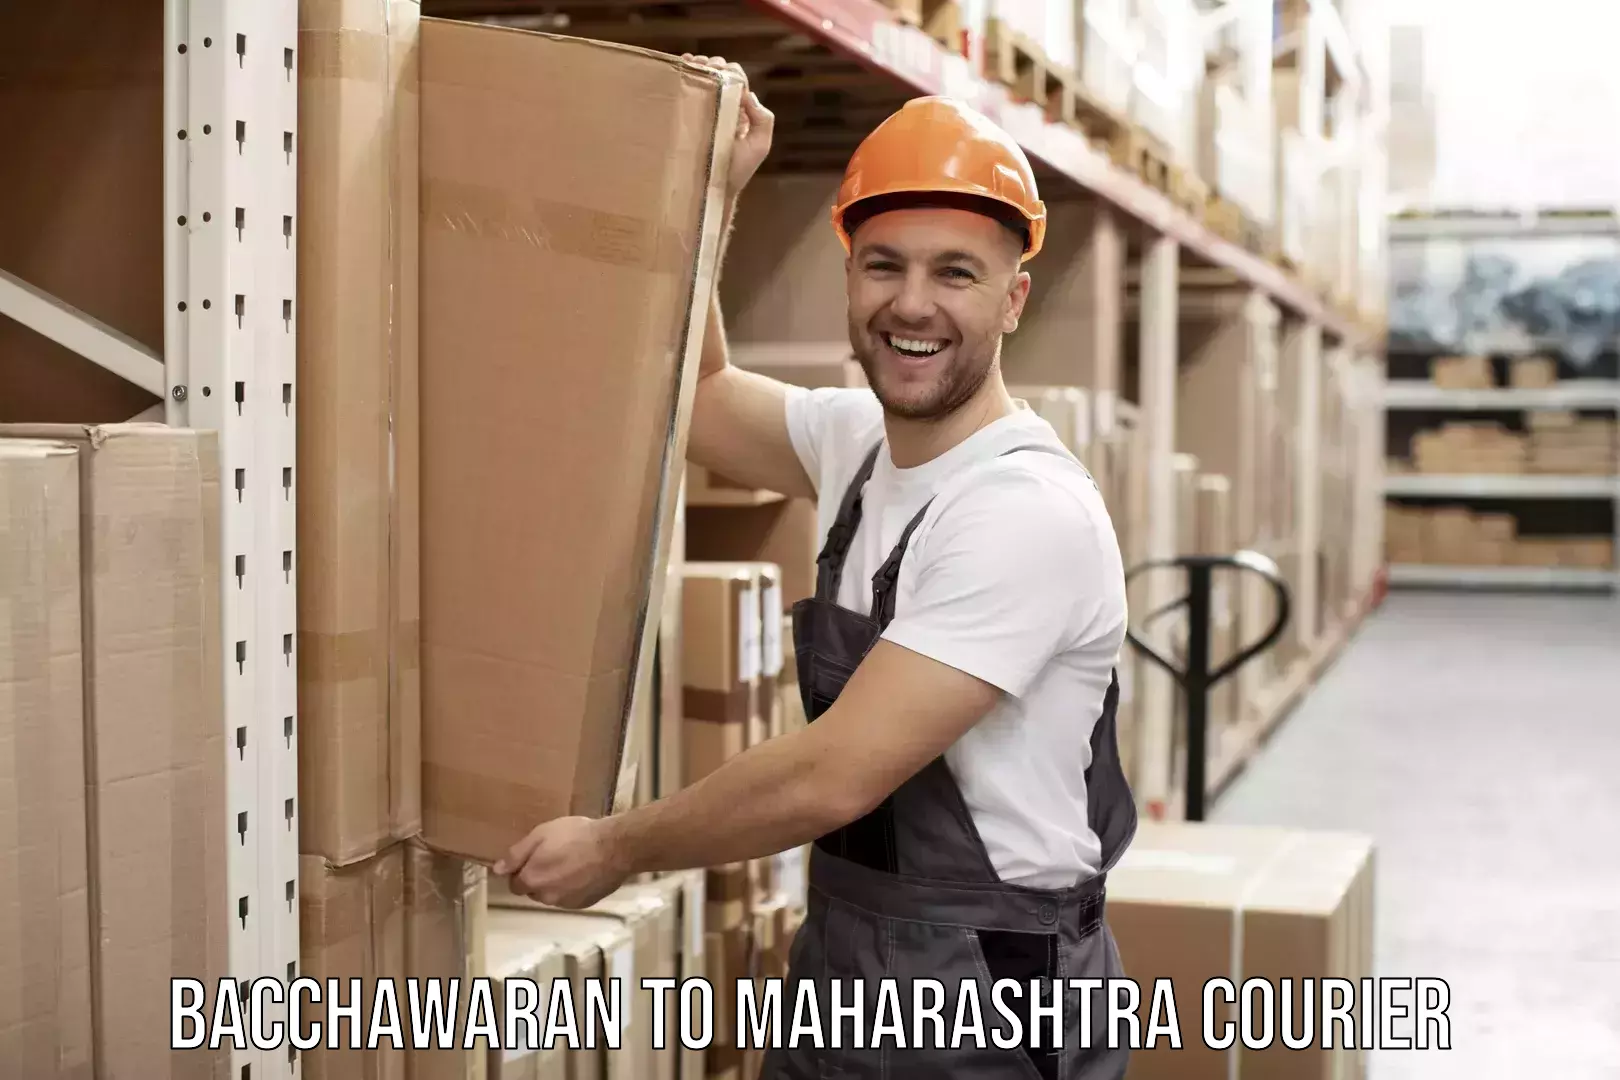 Specialized moving company Bacchawaran to Khandala Pune